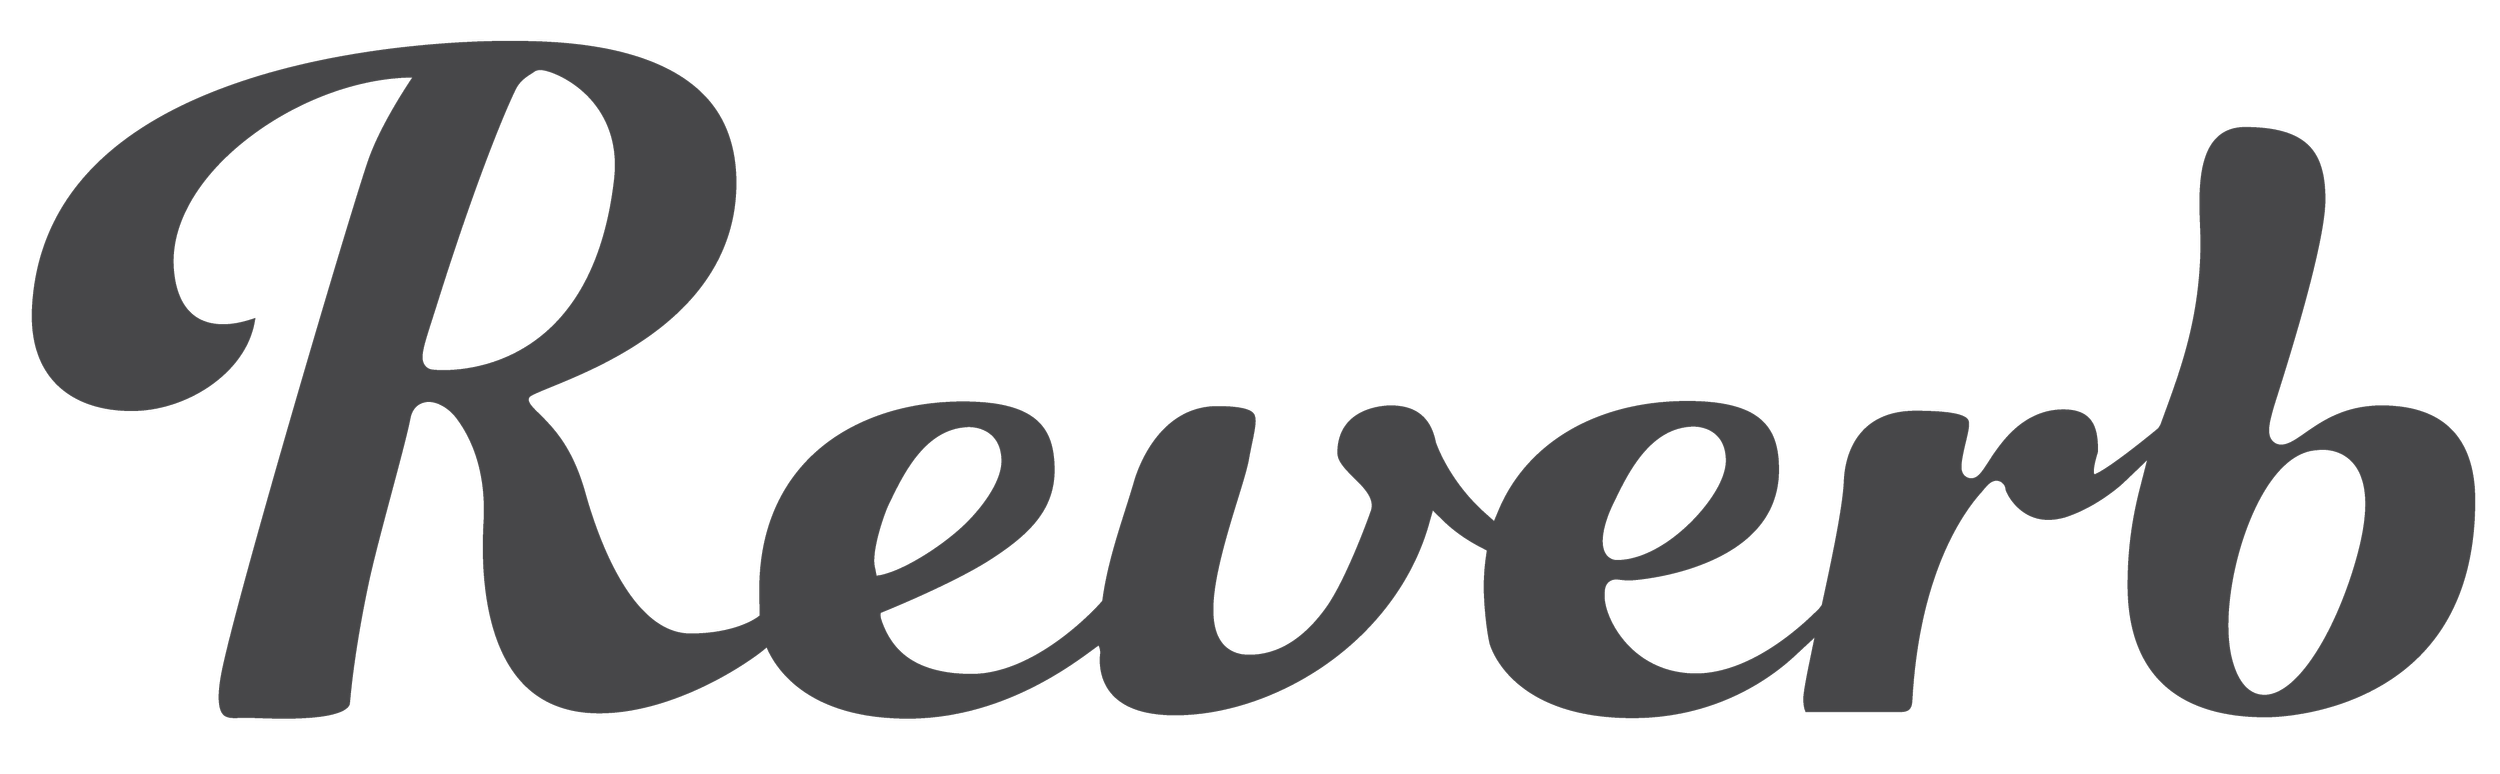 Reverb-Logo_GRAY.png